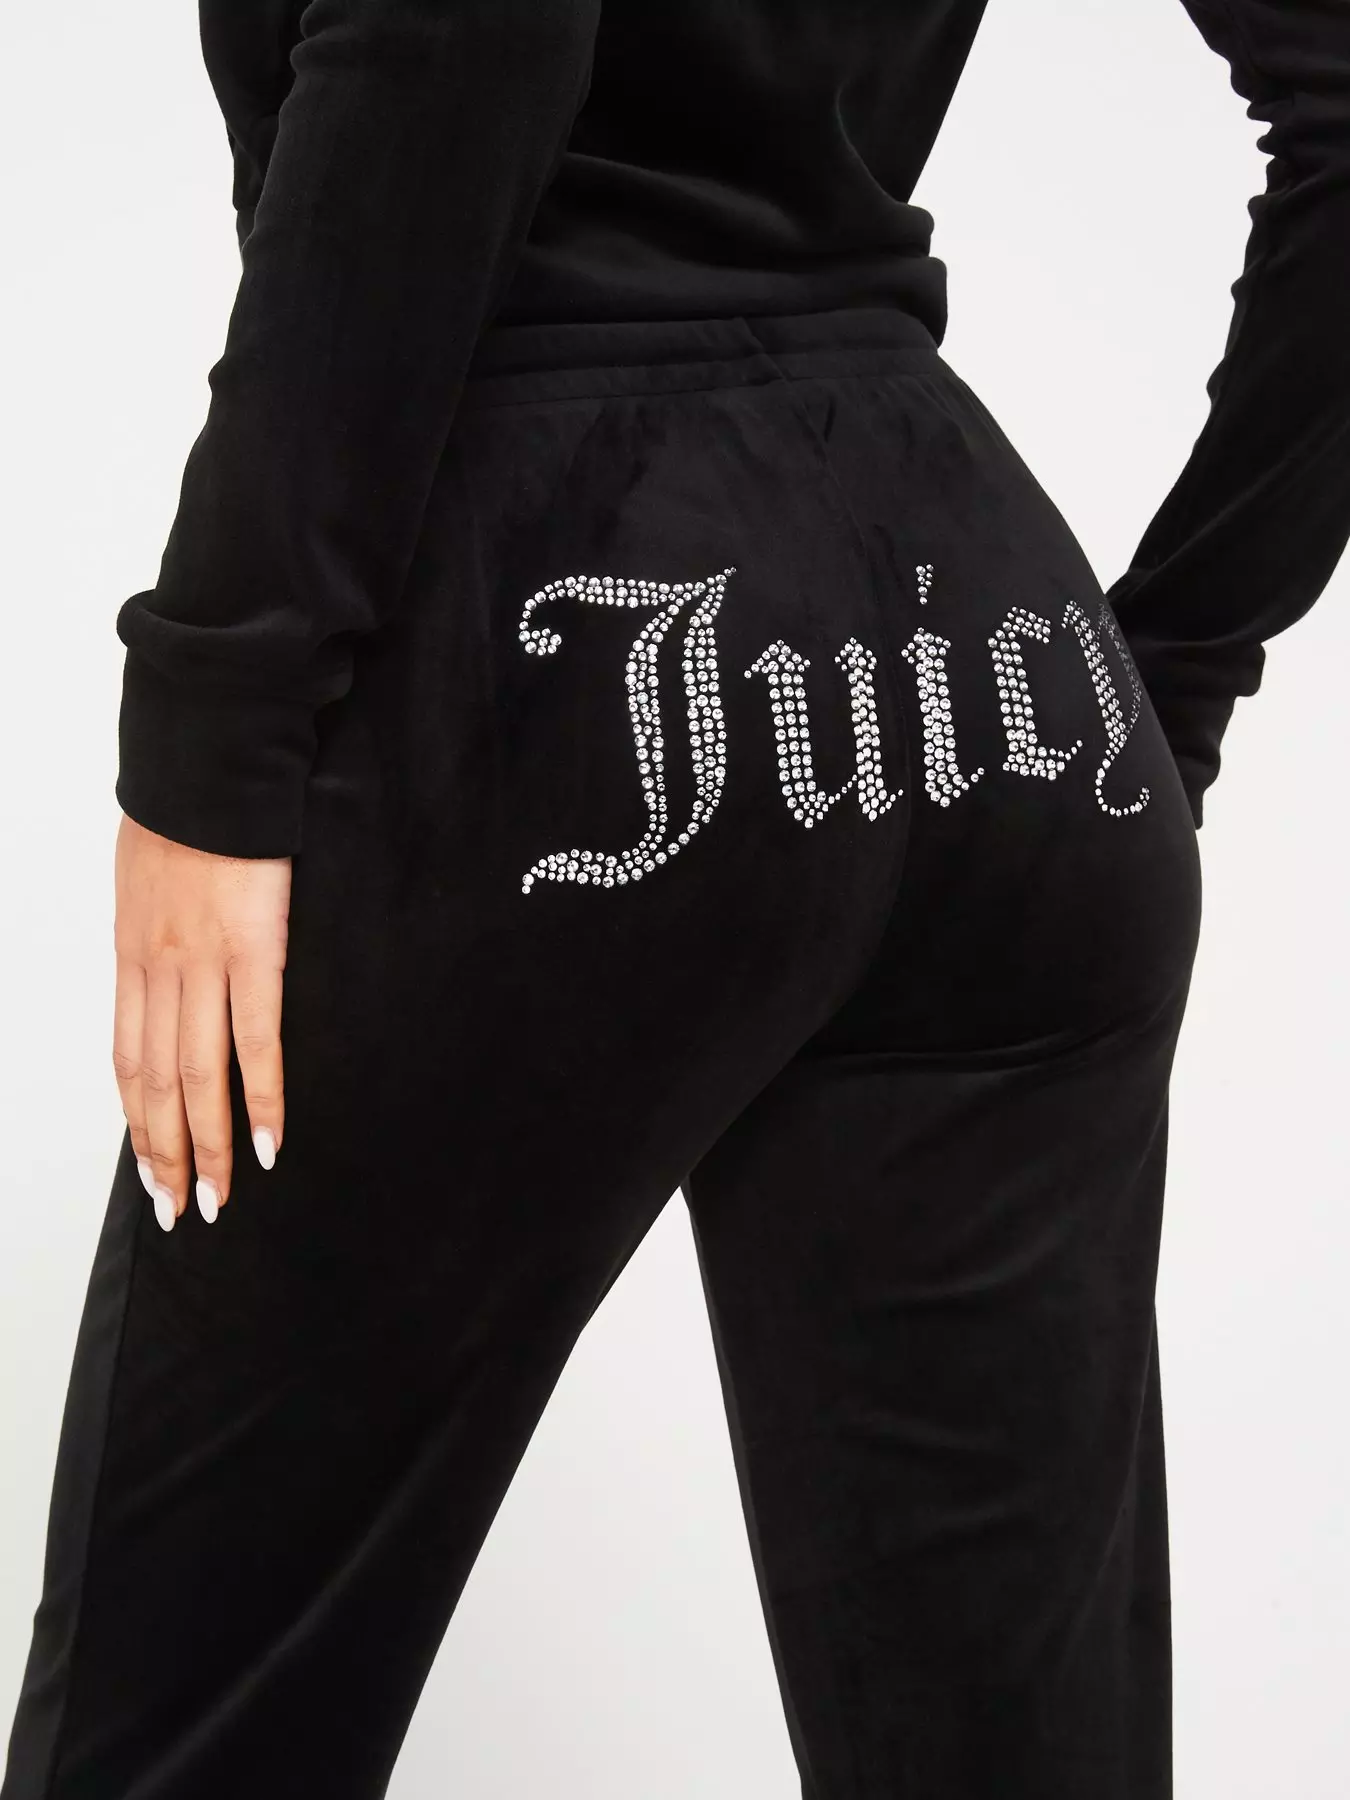 Juicy Couture printed bralet and leggings co-ord in multi